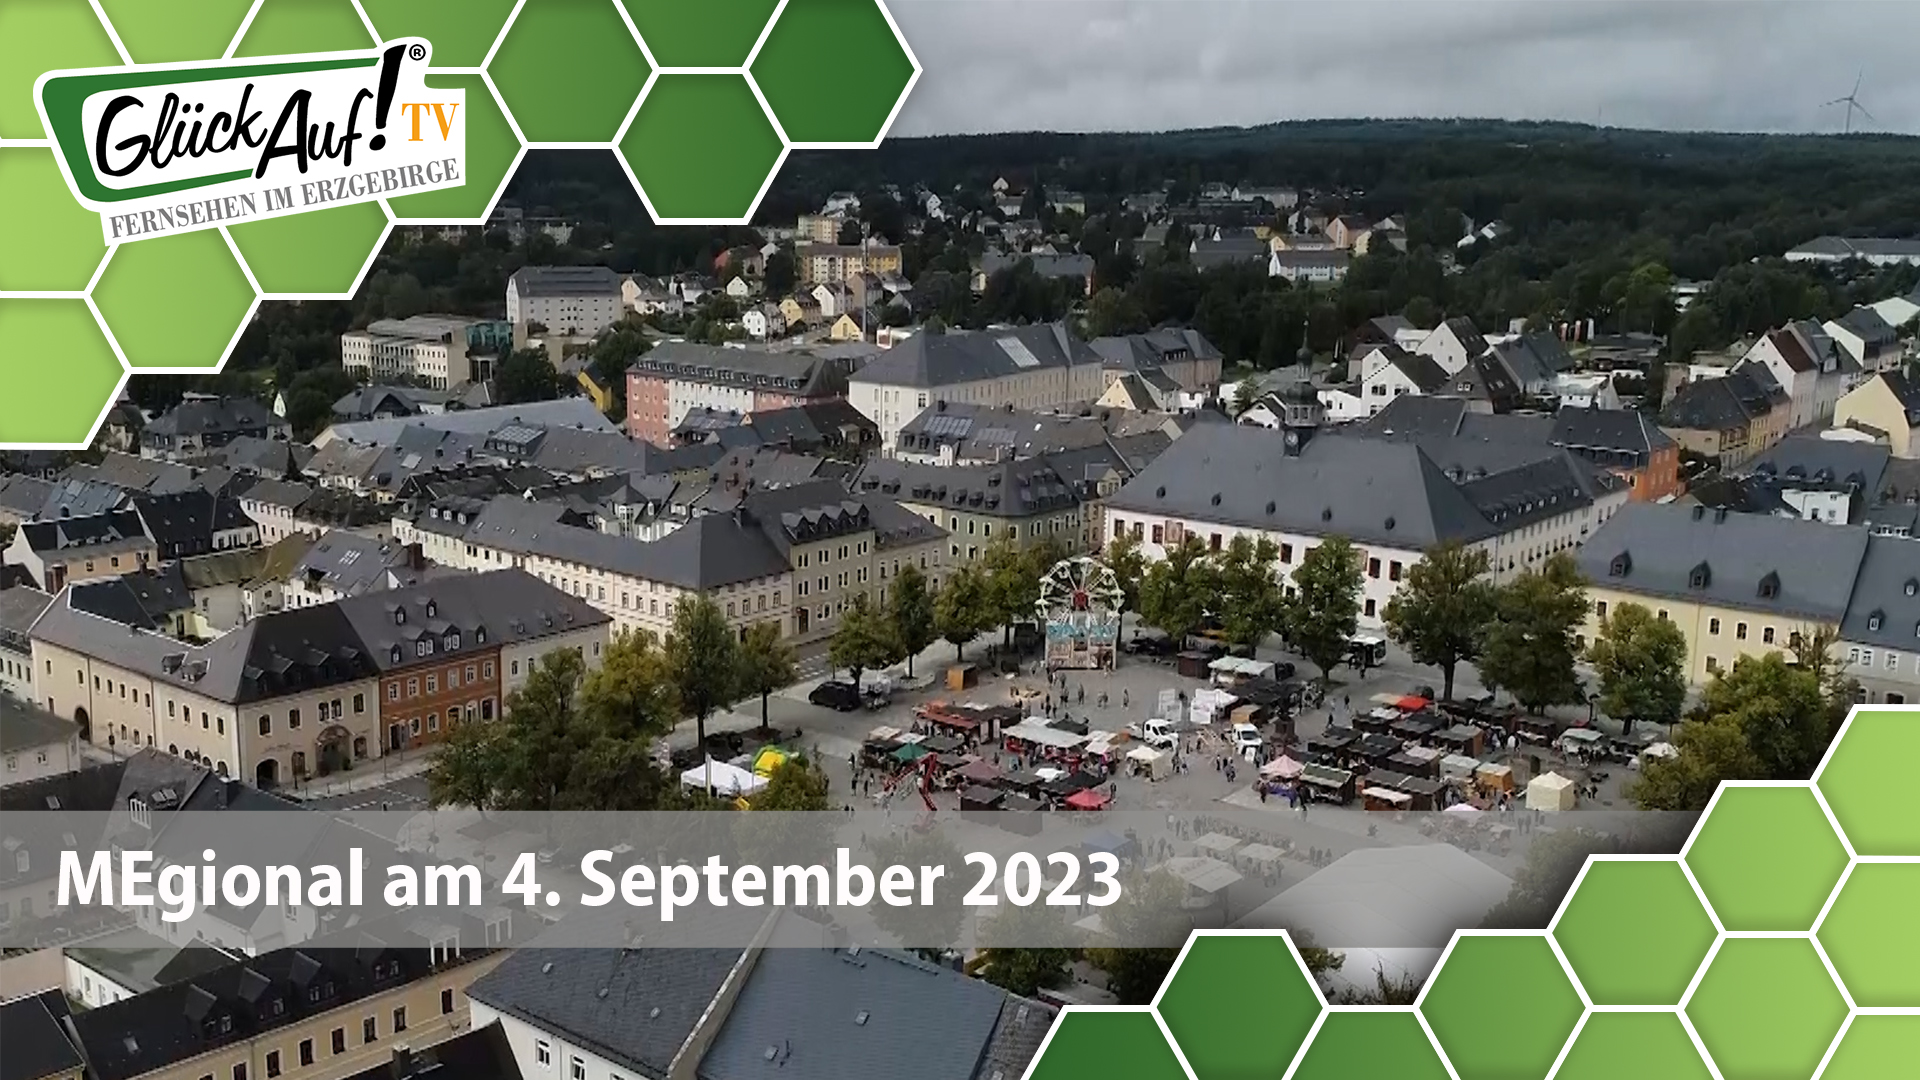 MEgional am 4. September 2023 mit dem Holzmarkt in Marienberg